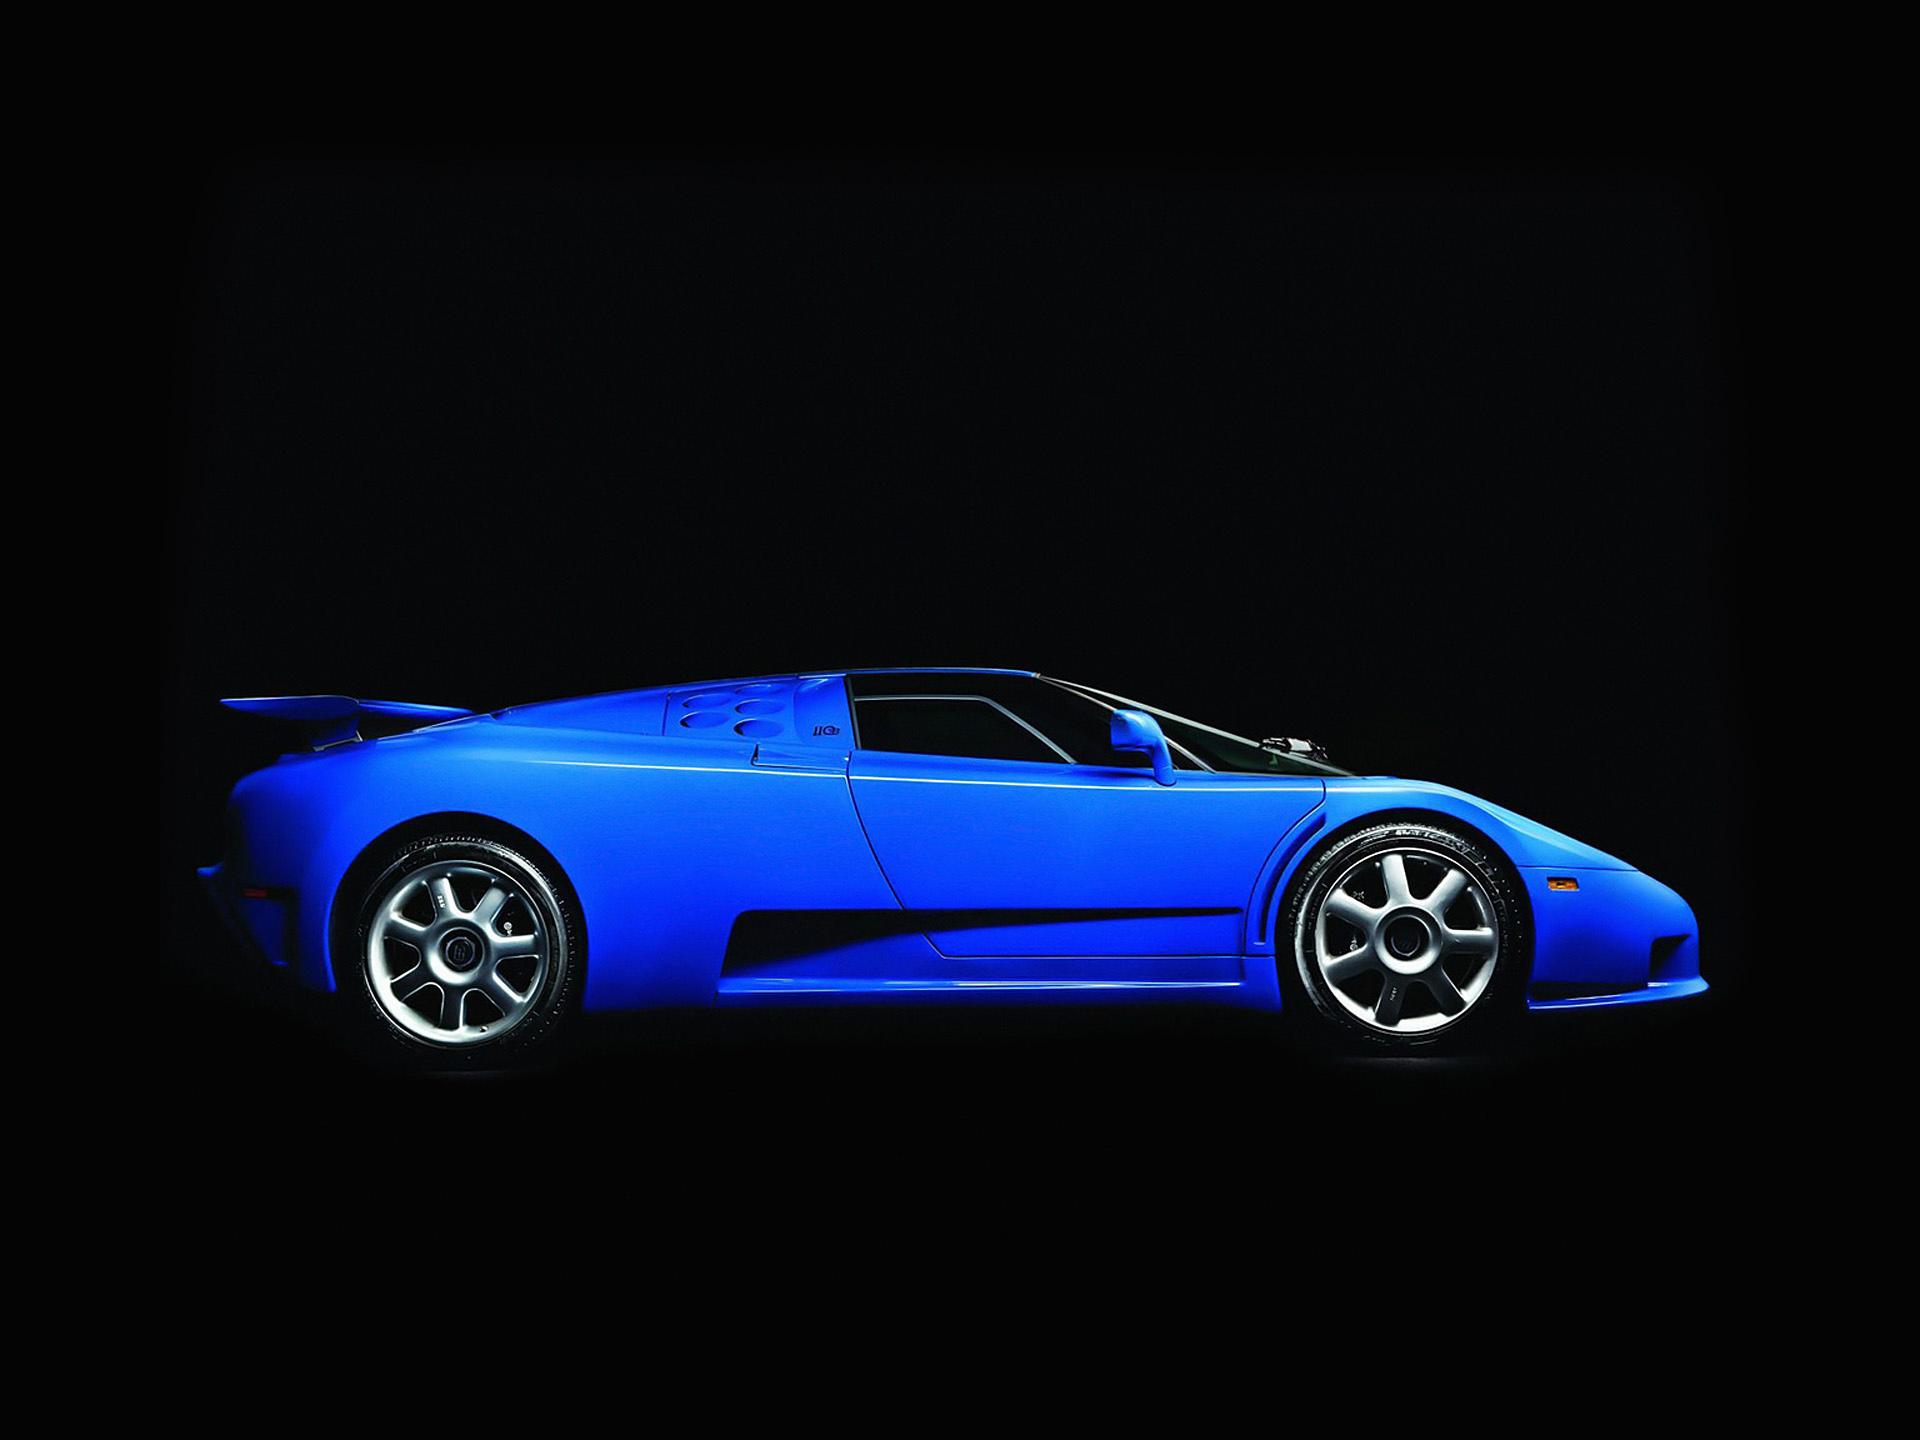 Bugatti EB110 GT at 1152 x 864 size wallpapers HD quality